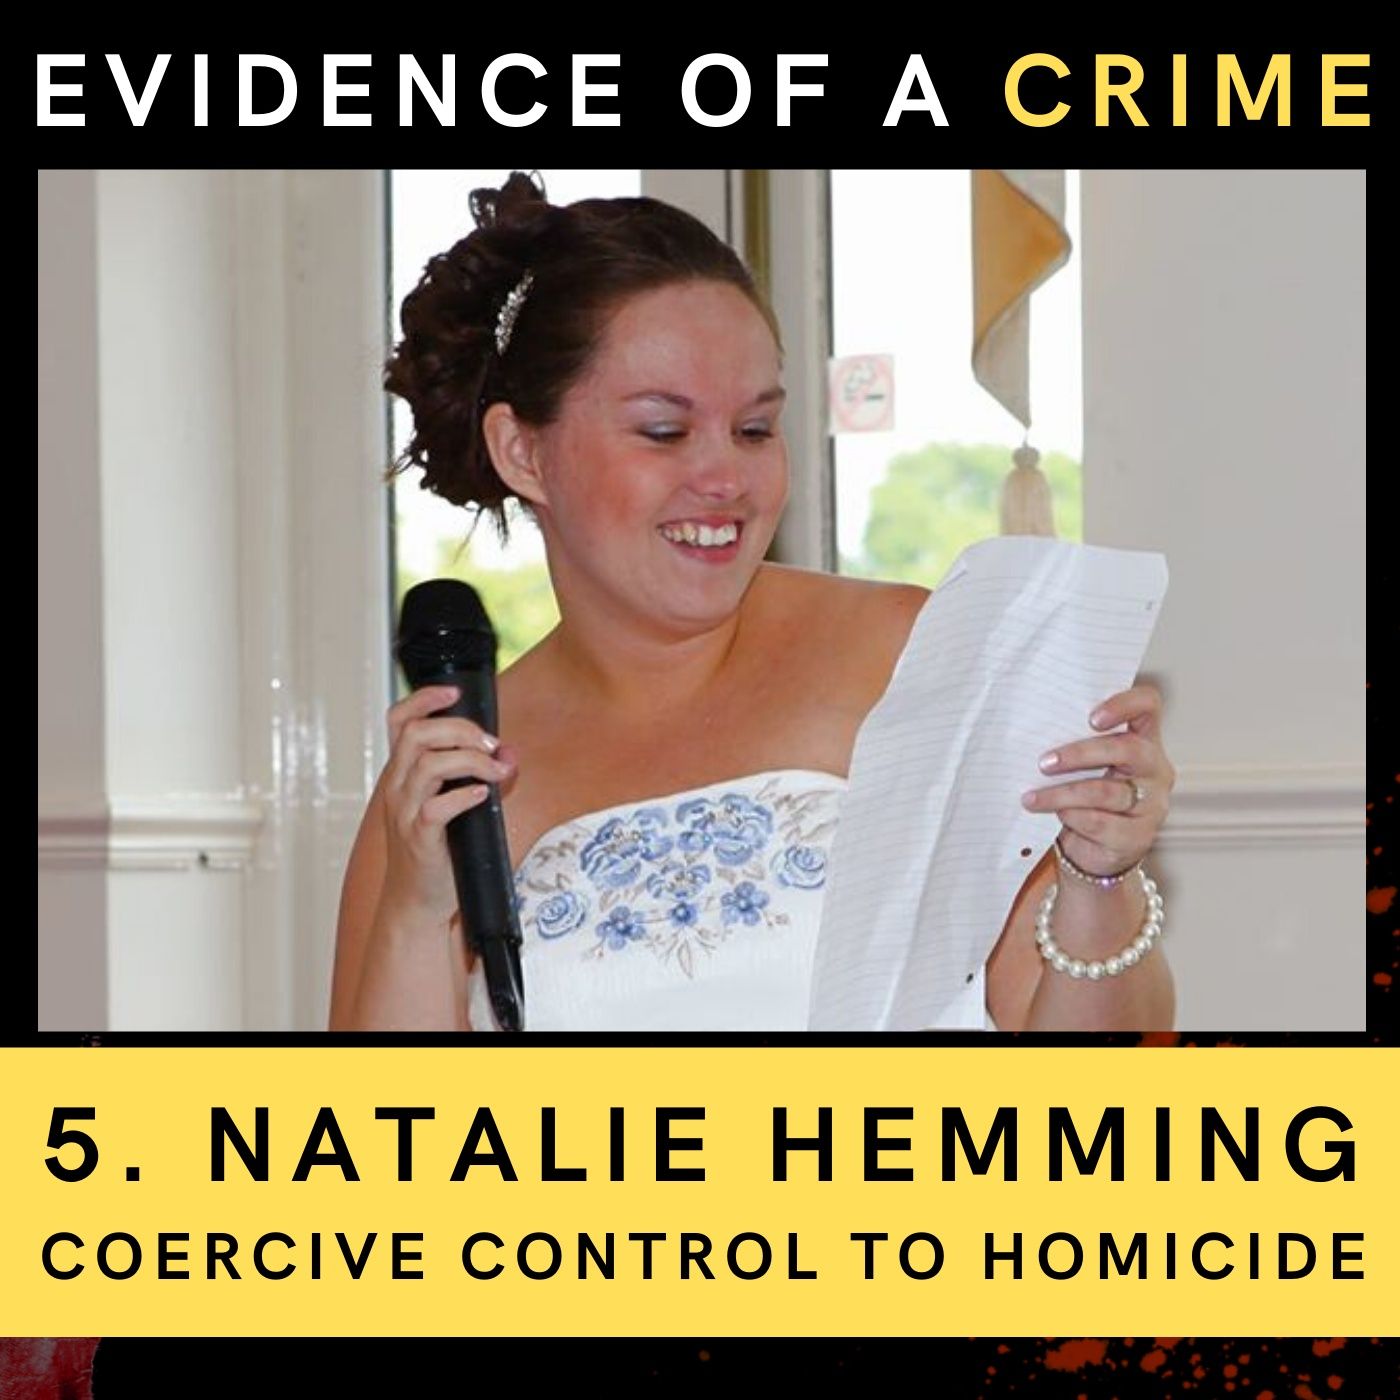 5. Natalie Hemming: Coercive Control to Homicide